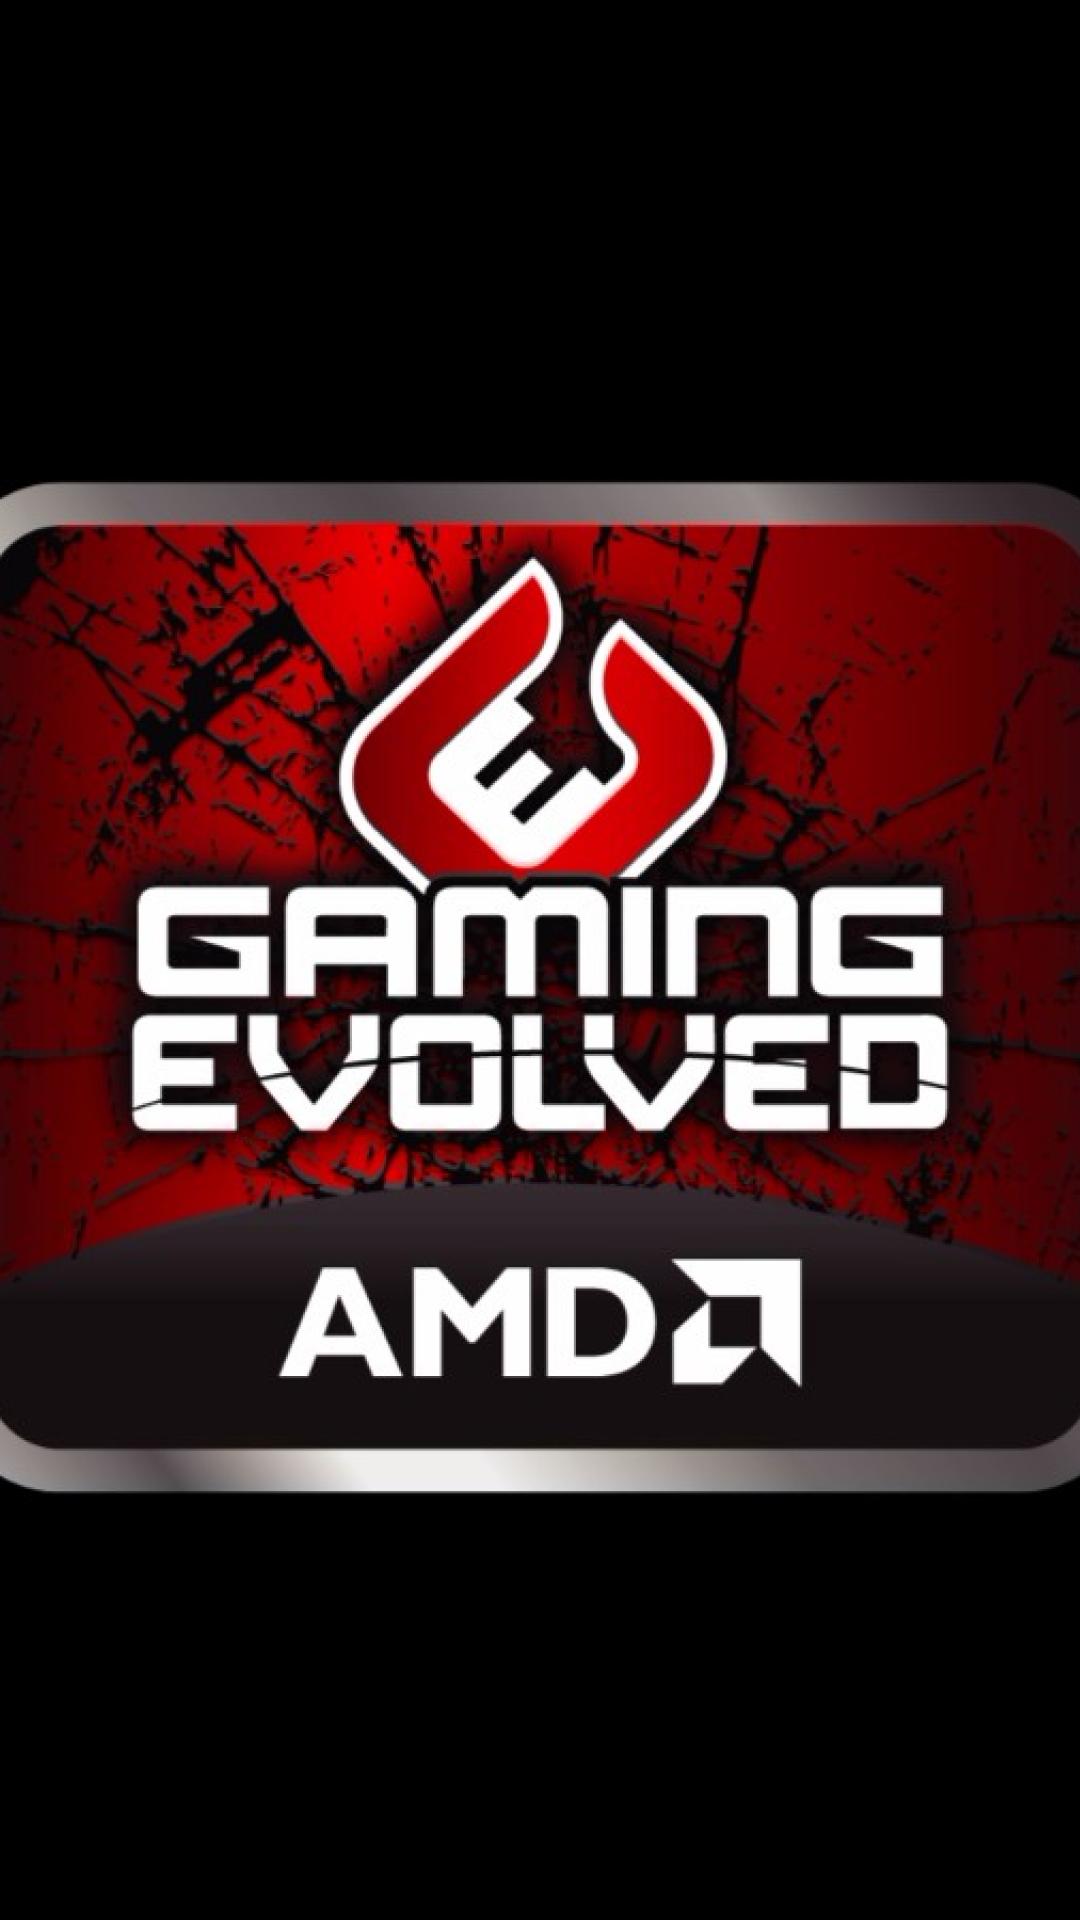  43 AMD Gaming  Wallpaper on WallpaperSafari